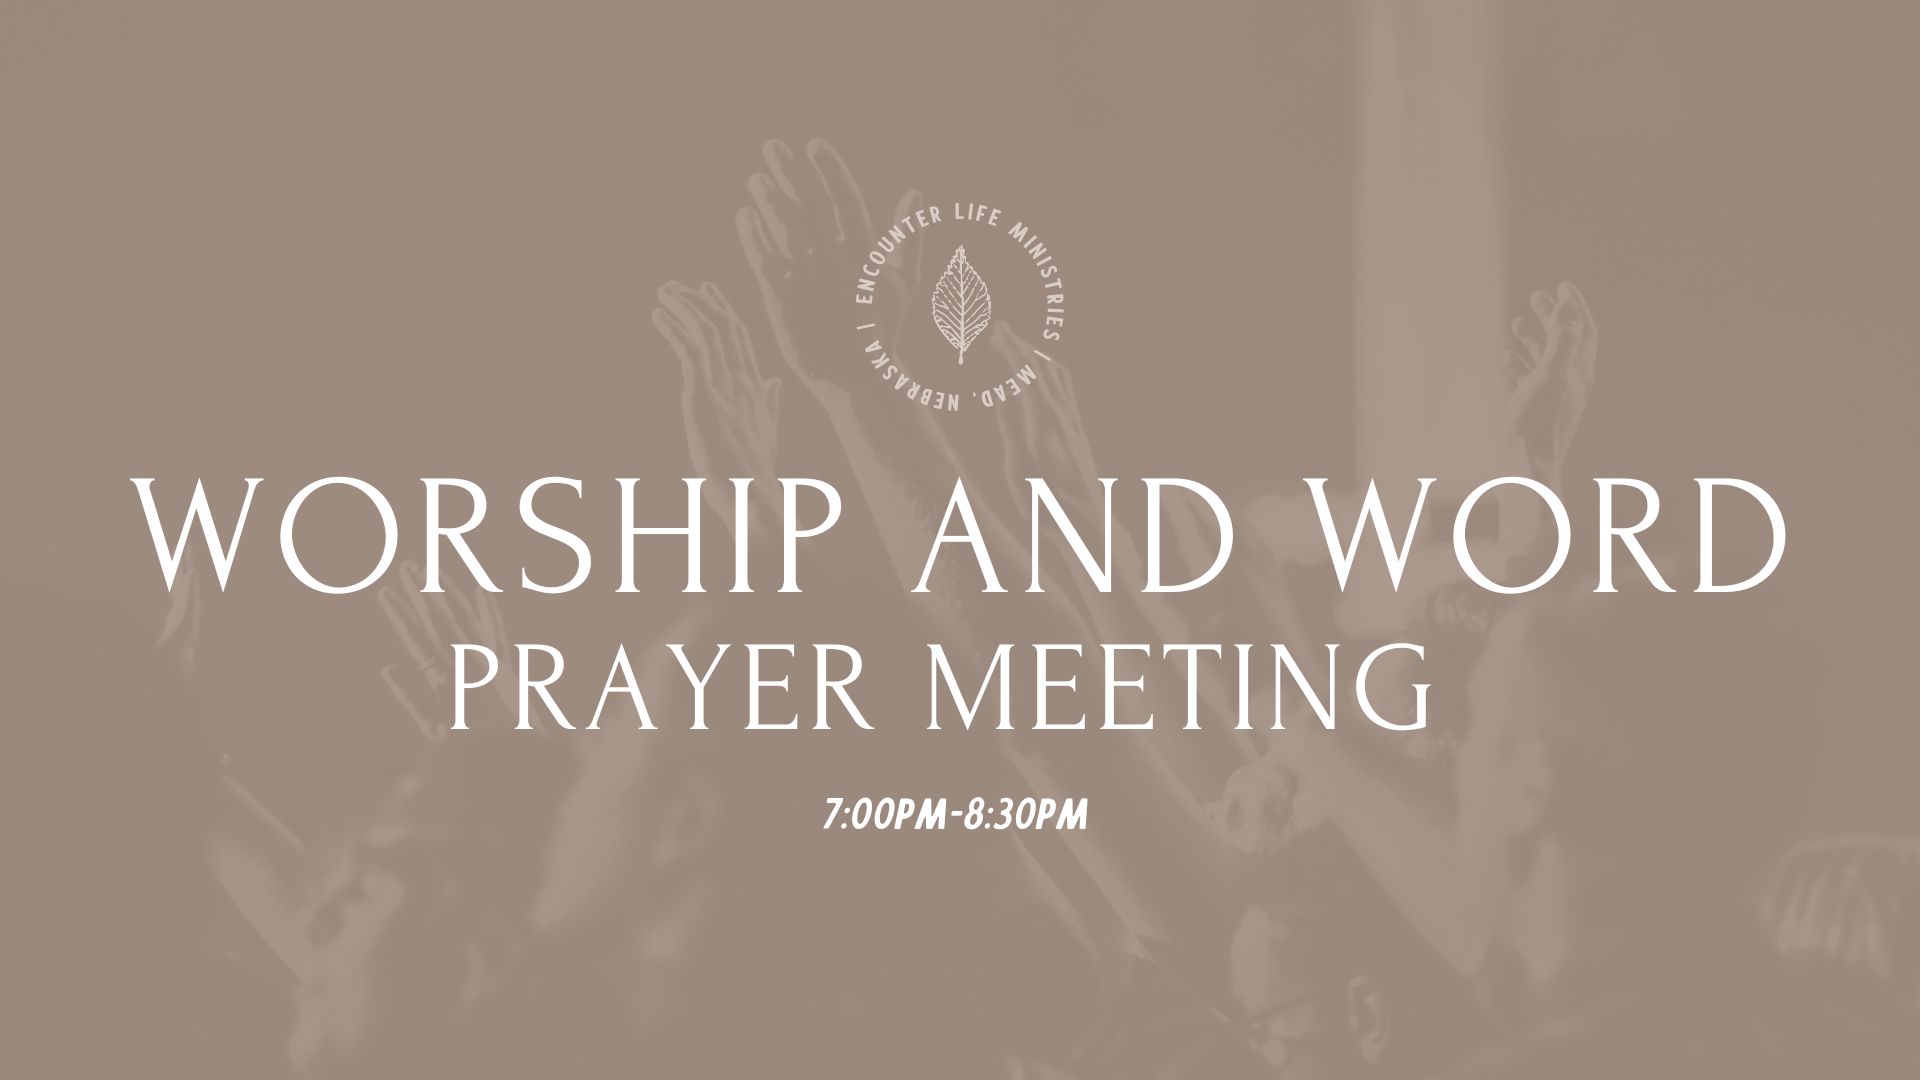 Worship and Word prayer meeting Wednedays